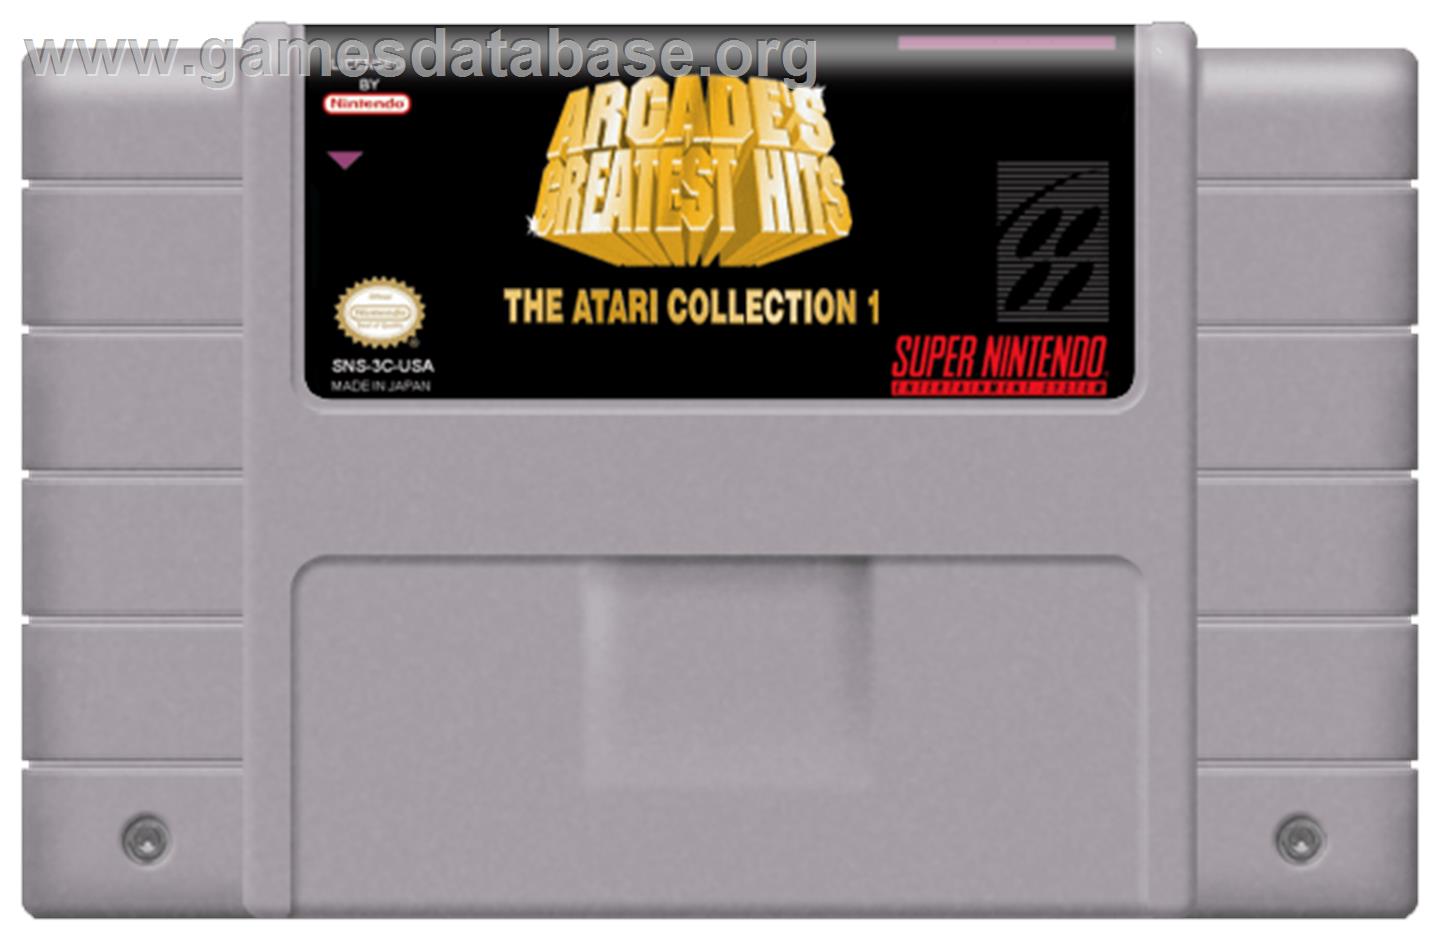 Arcade's Greatest Hits: The Atari Collection 1 - Nintendo SNES - Artwork - Cartridge